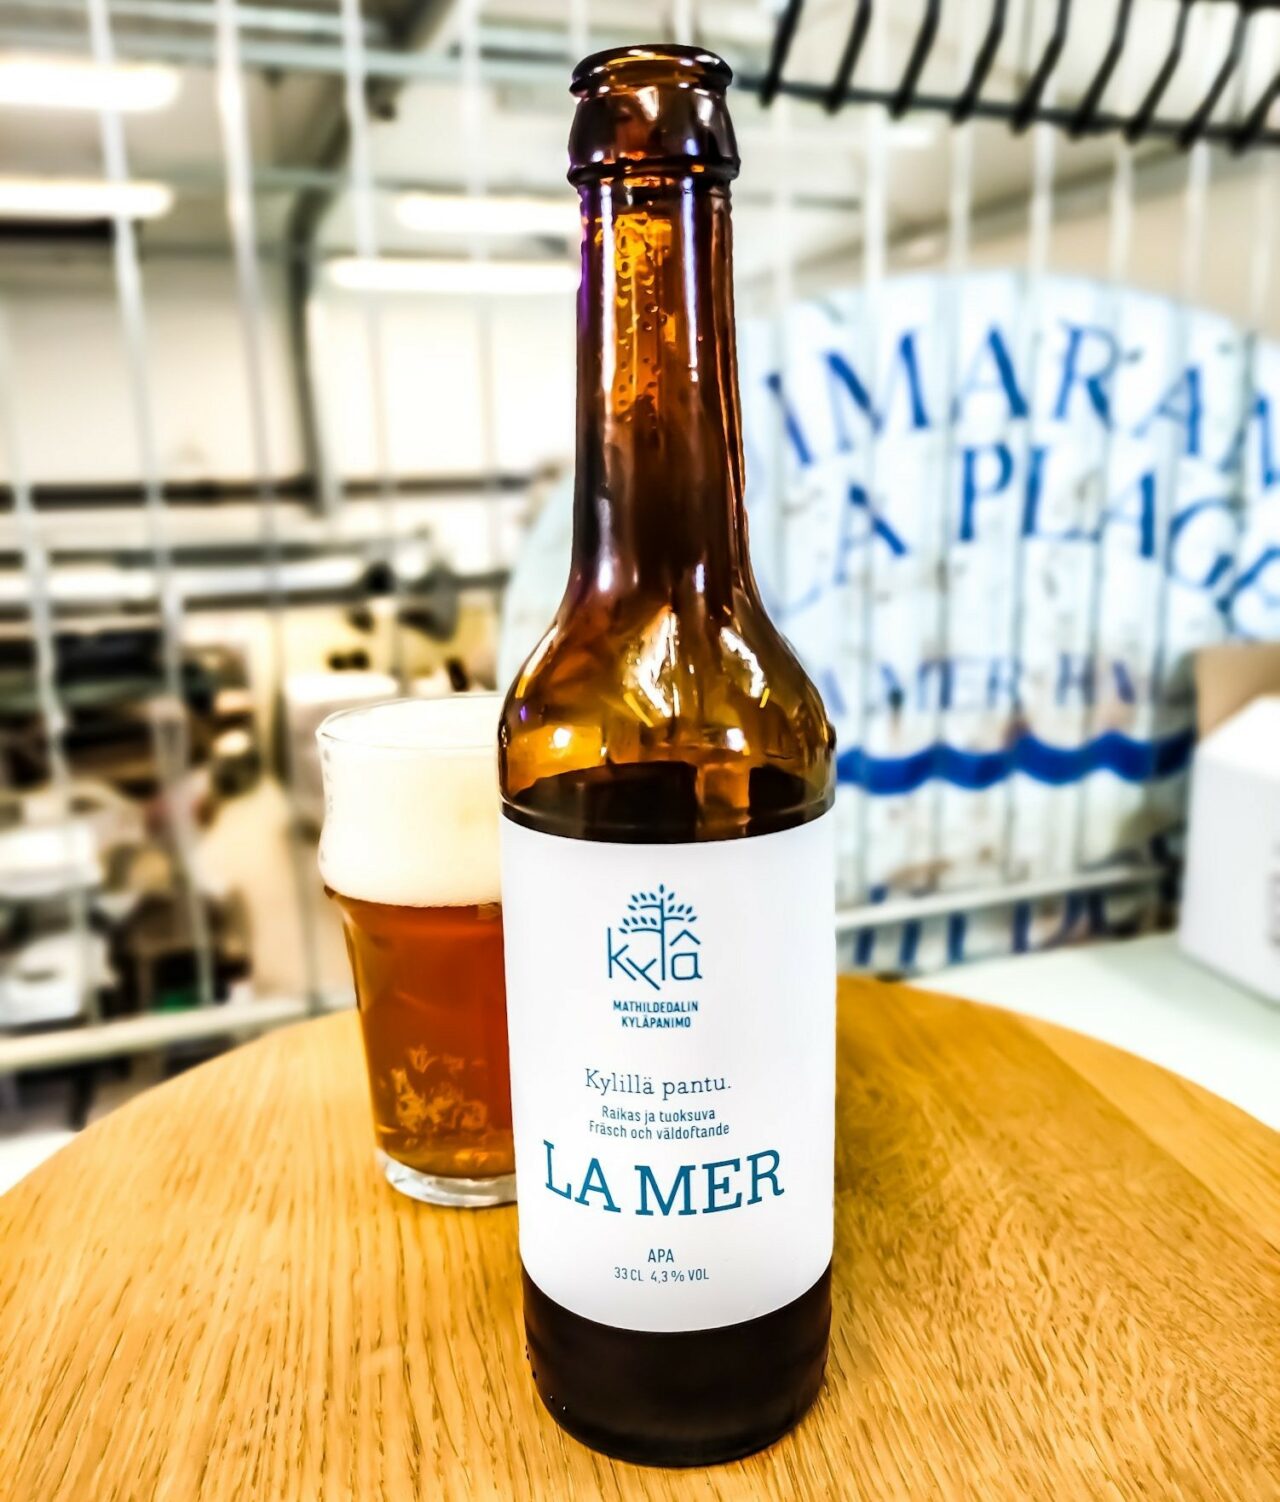 La Mer APA | Mathildedalin Kyläpanimo brewery, Finland | Craft Beer Nomads